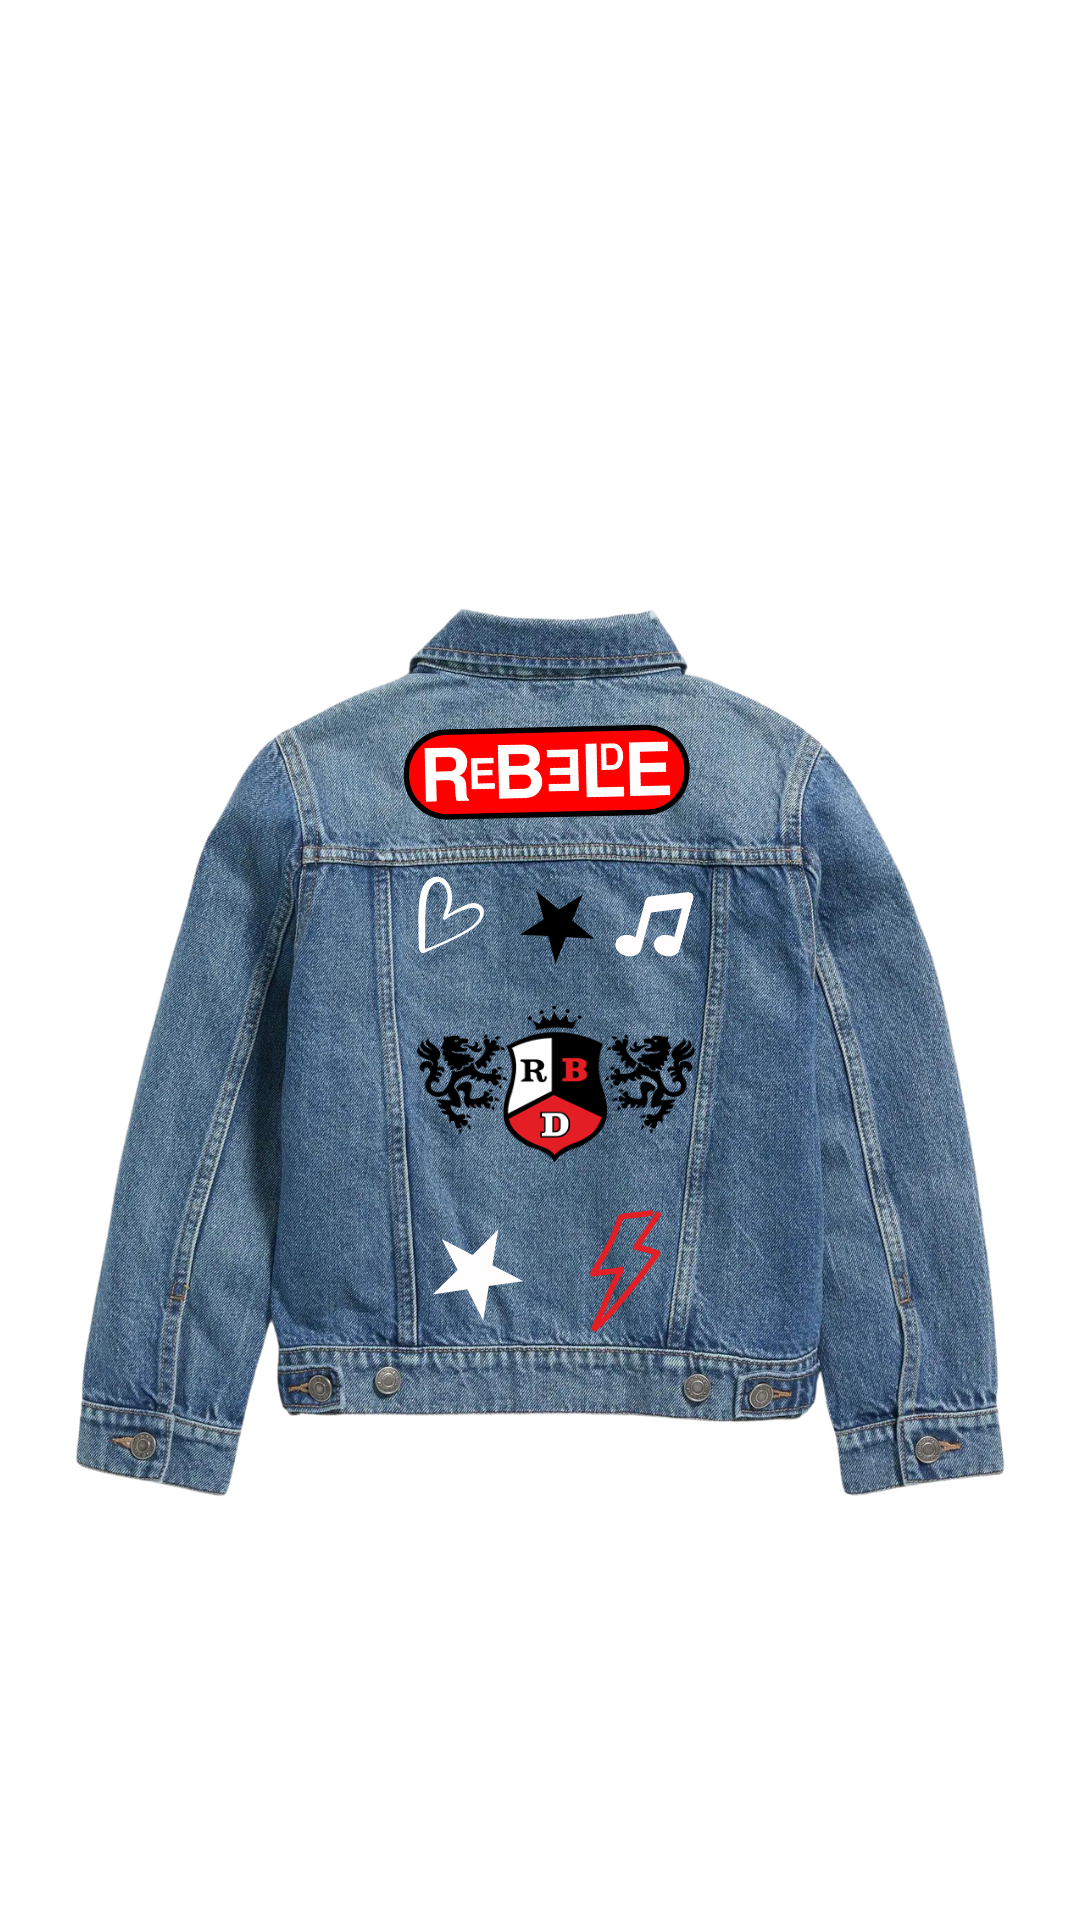 RBD denim jacket